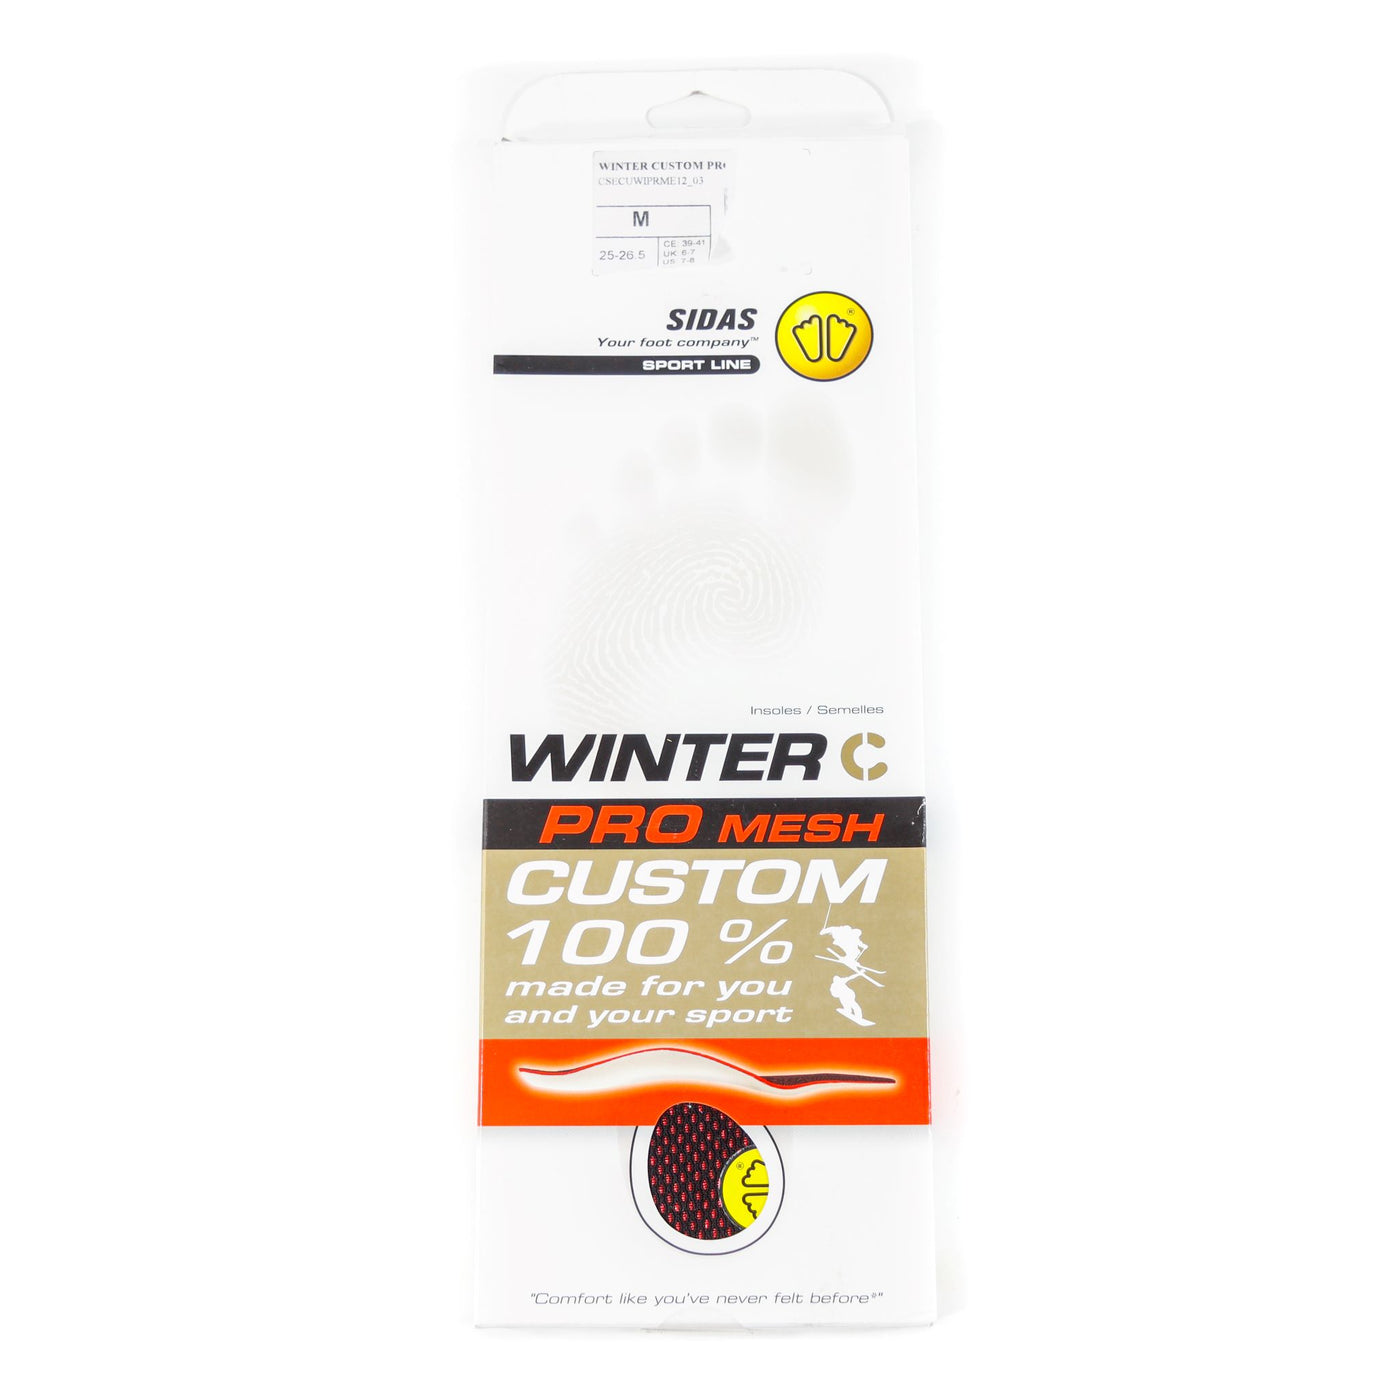 Sidas Winter Pro Mesh 100% Custom Ski Insoles - 2012 | XS, S, M INSOLES Sidas   